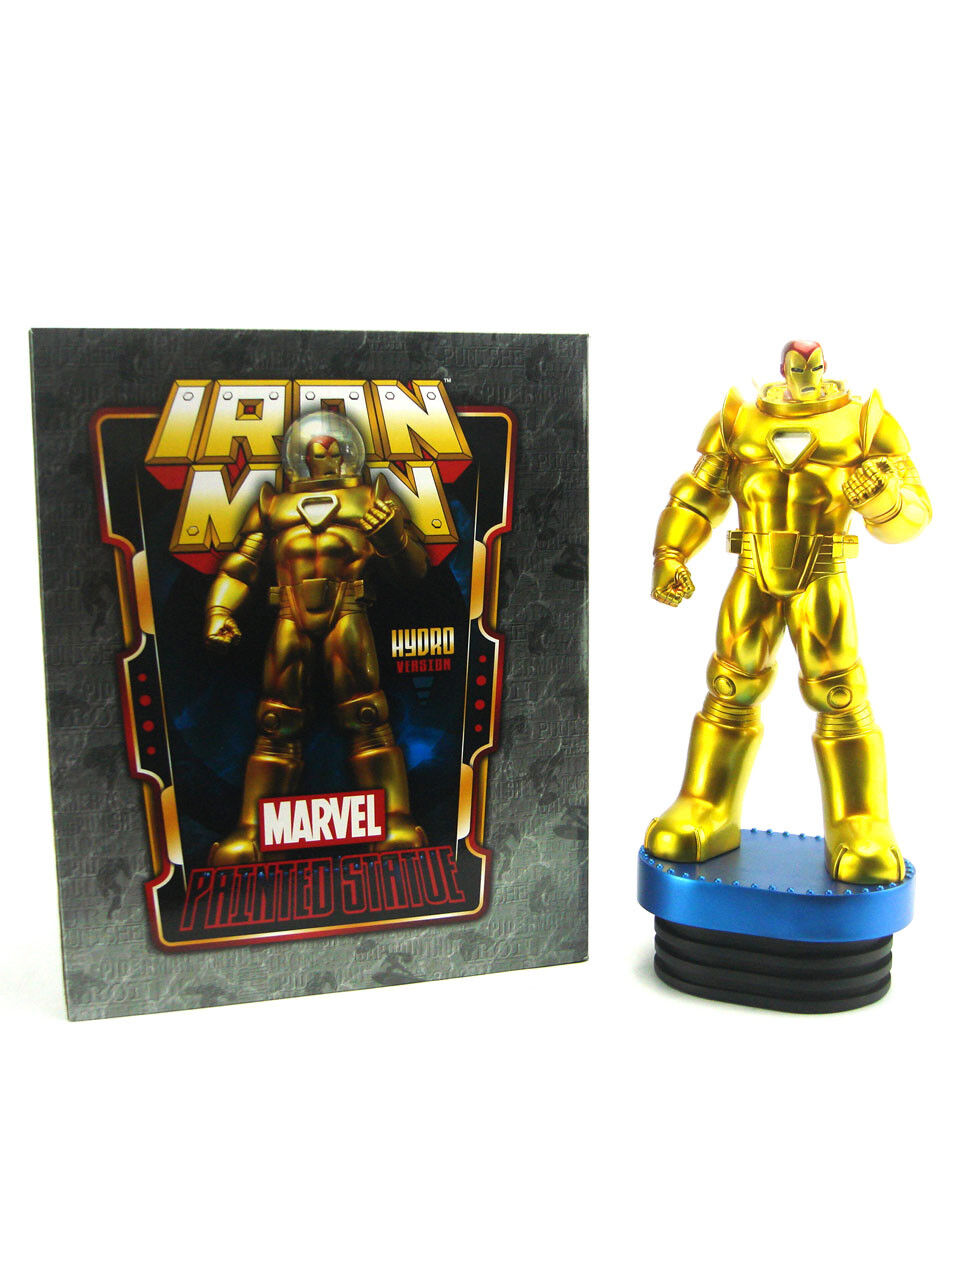 Bowen Designs Iron Man Statue Hydro Armor Version Marvel Sample Rare New In Box